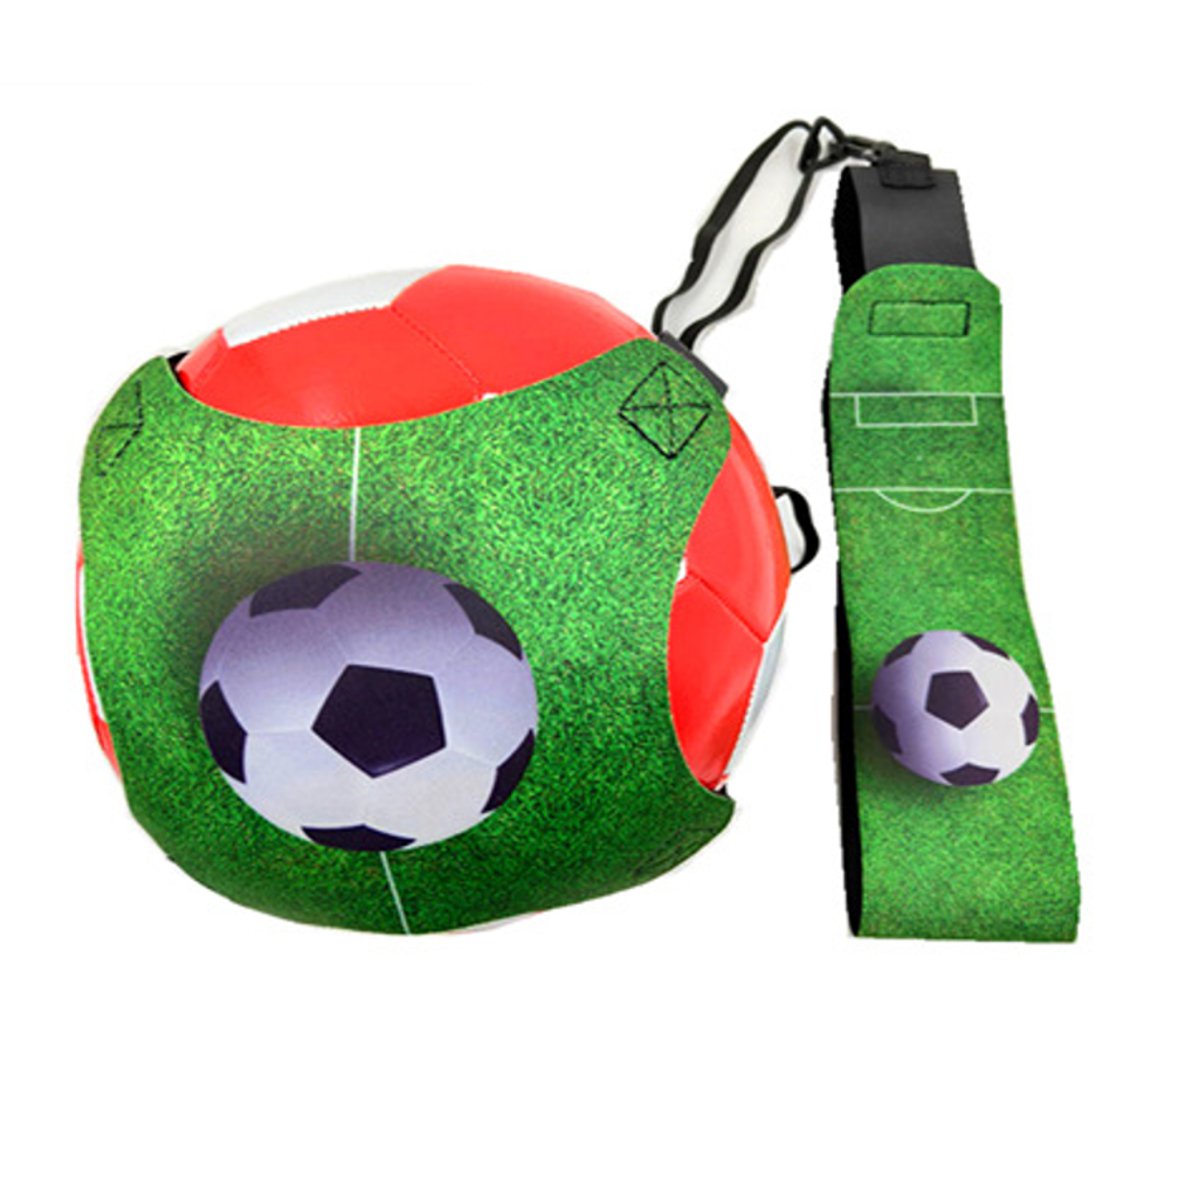 18M-3D-Football-Kick-Trainer-Adjustable-Elasticity-Soccer-Control-Skill-Practice-Equipment-Soccer-Tr-1811931-7